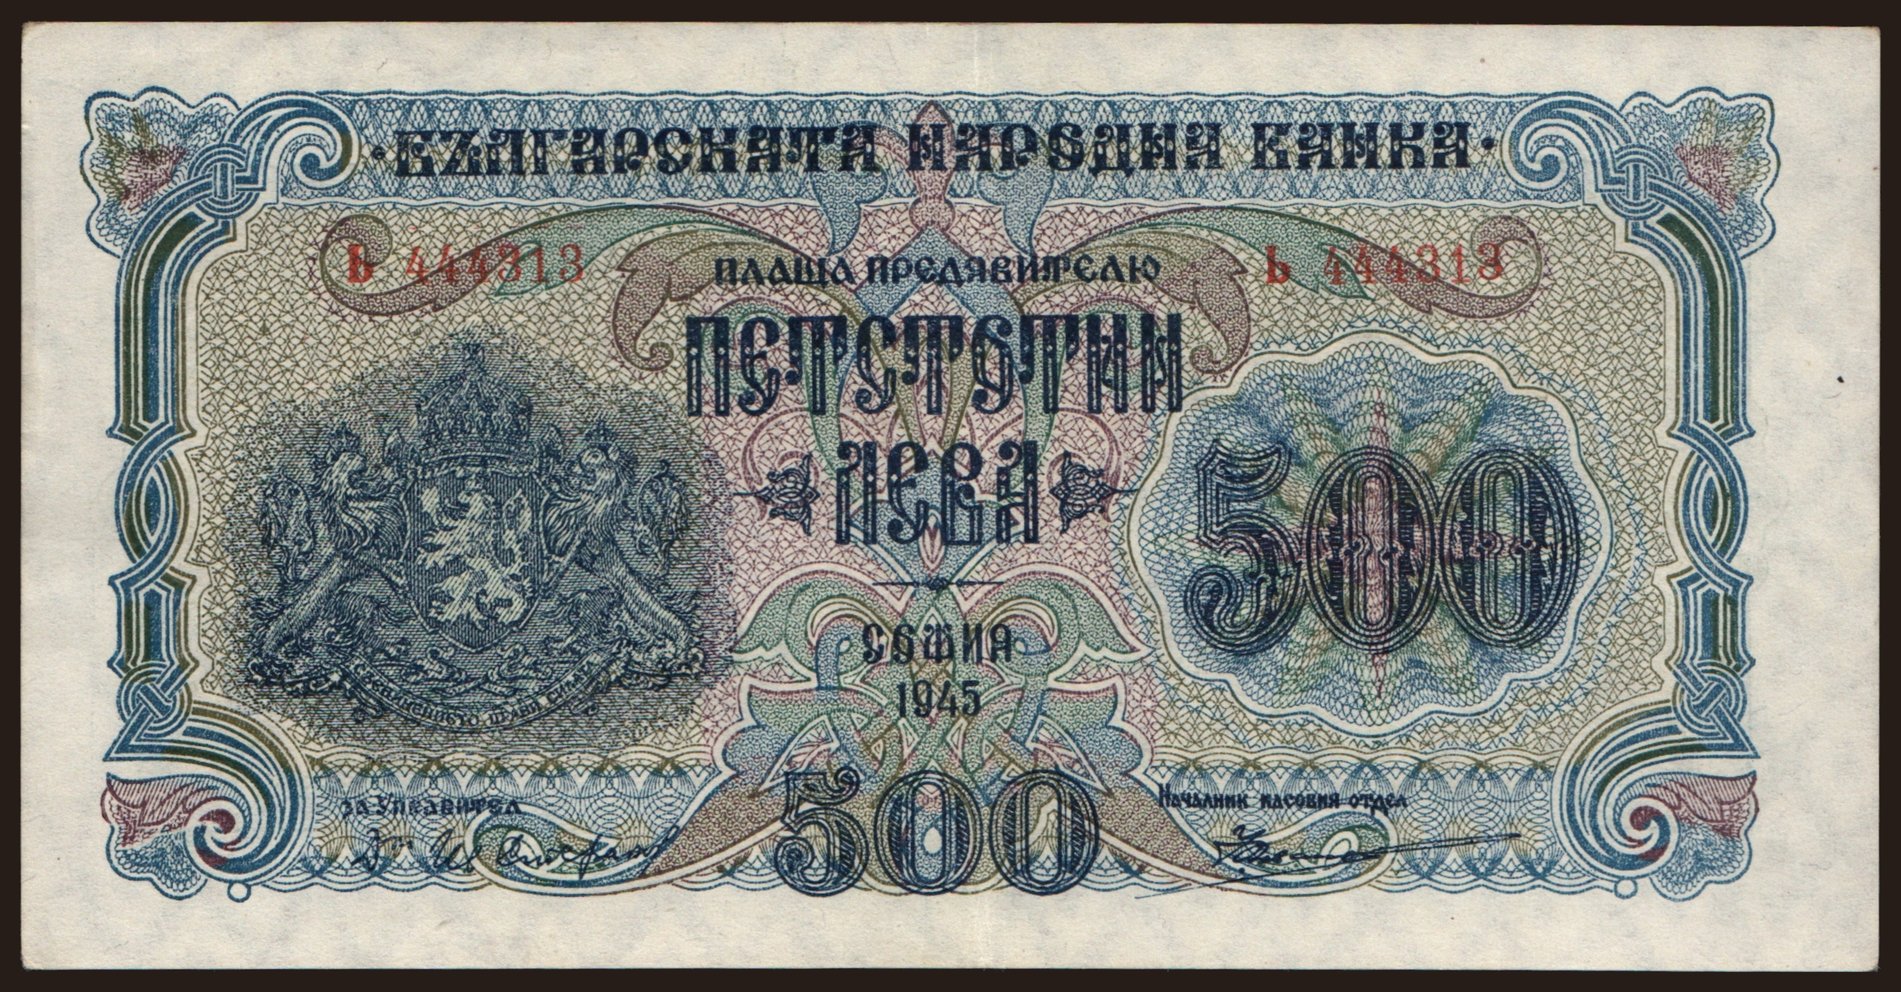 500 leva, 1945